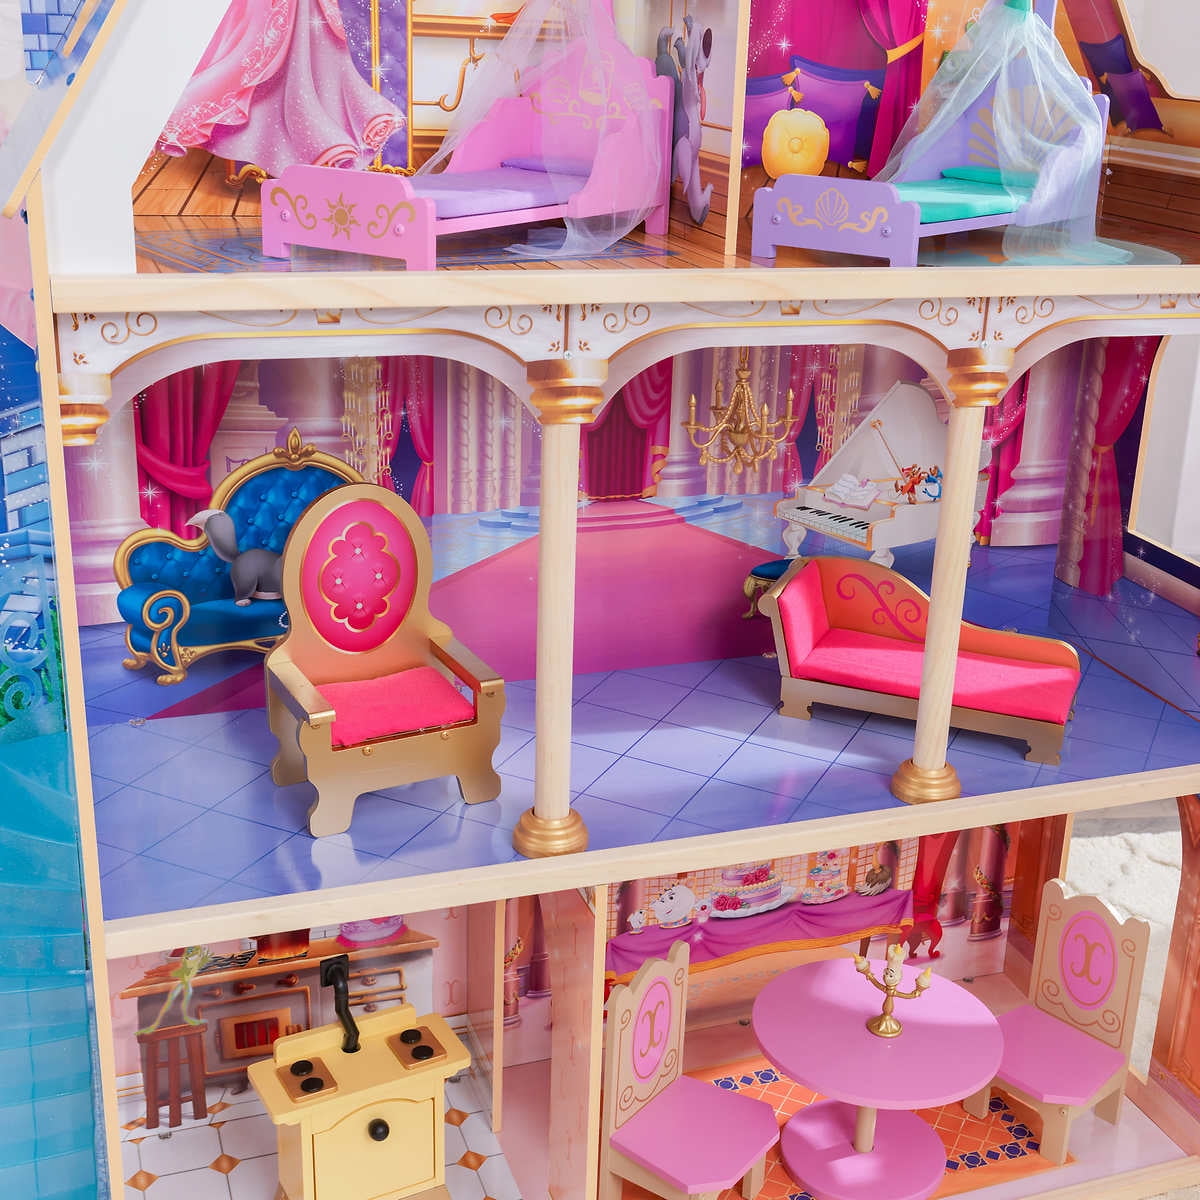 kidkraft princess dollhouse castle